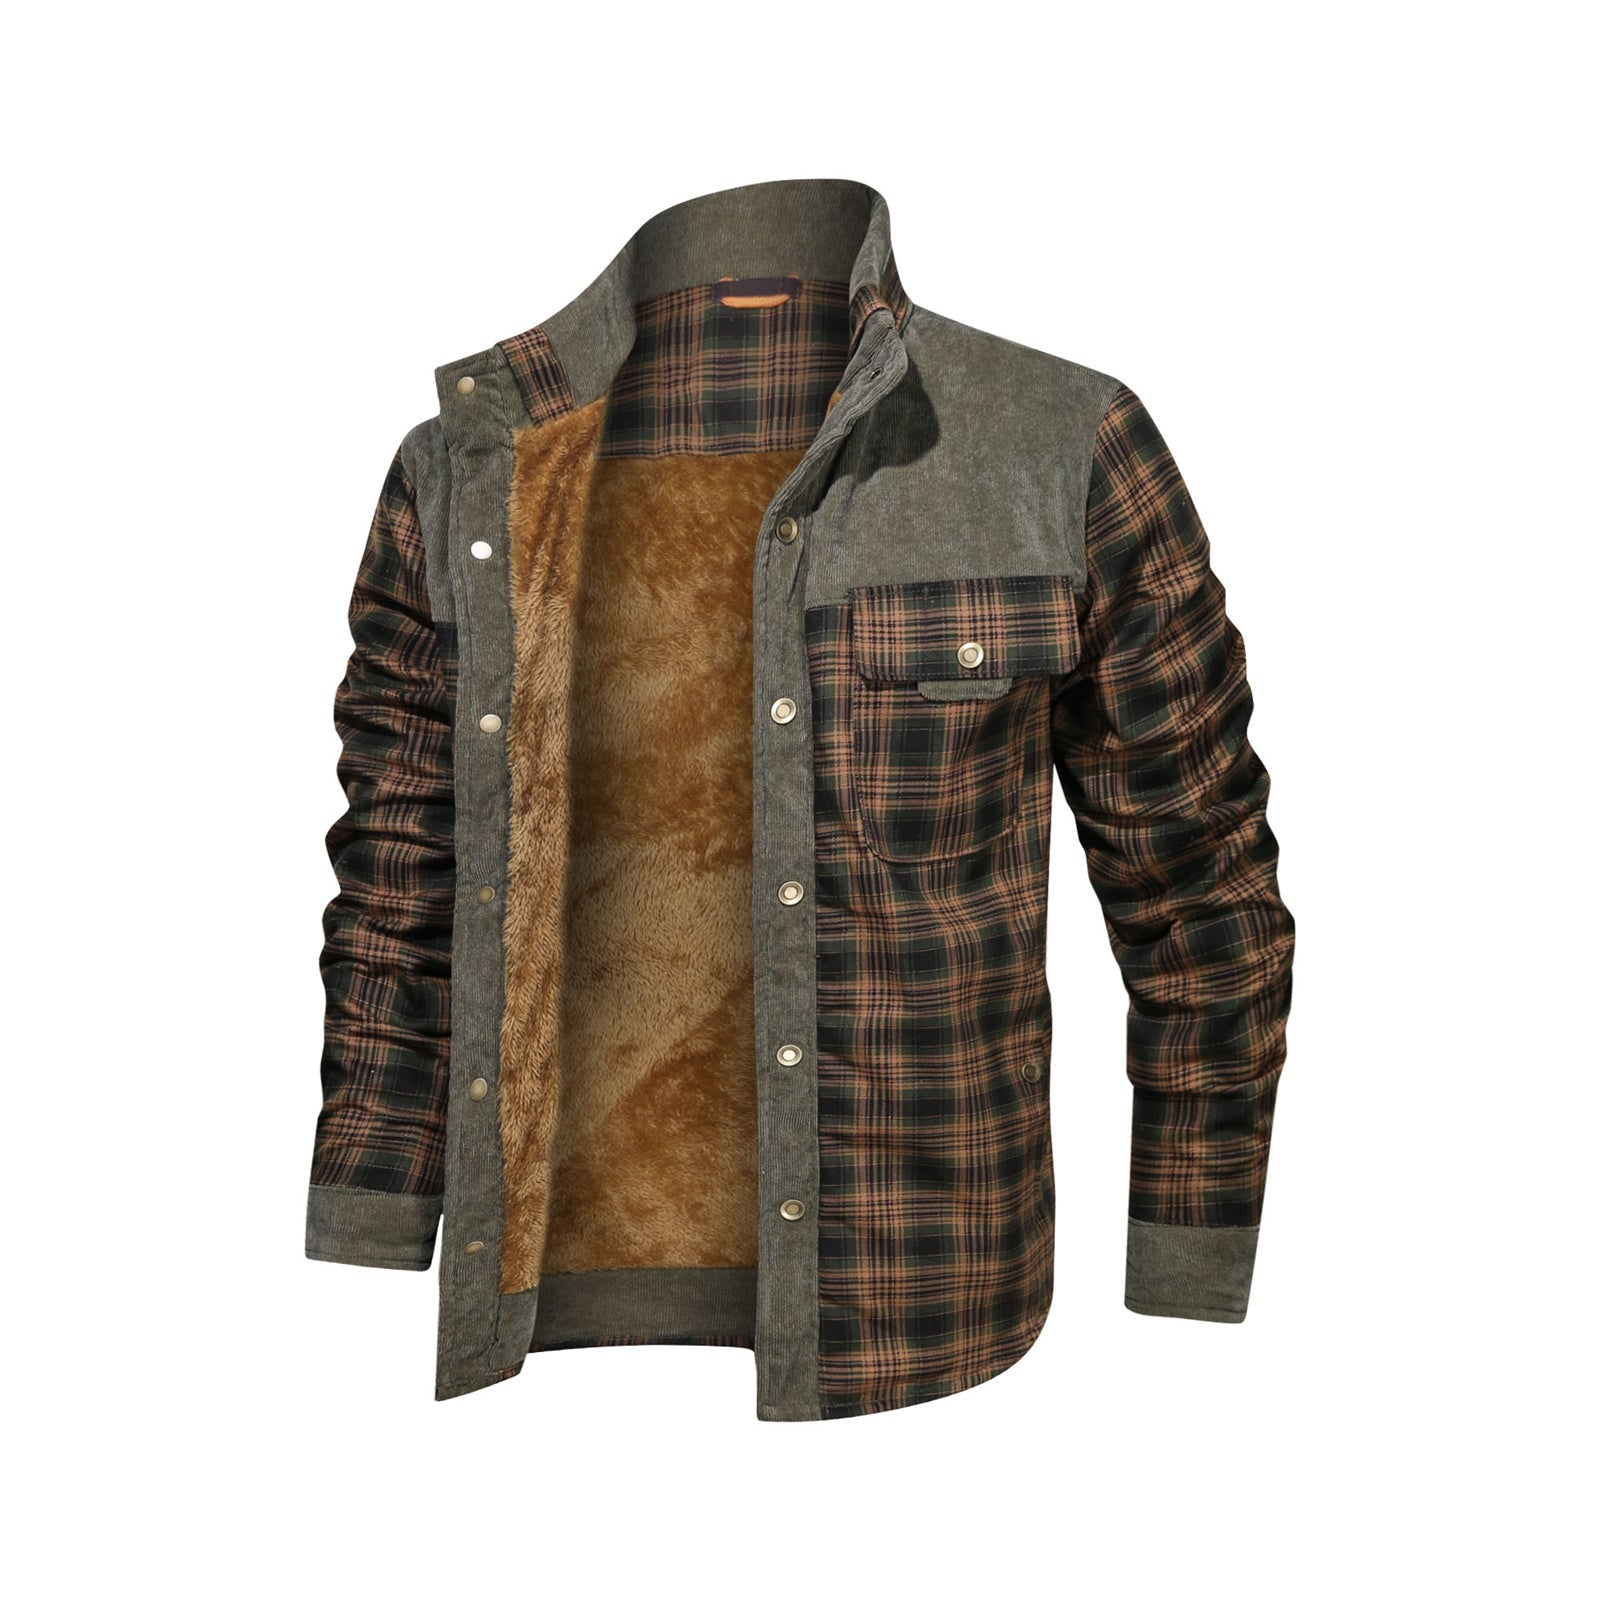 Men's Thick Fleece Army Jacket - Brand Winter & Autumn Coat - HalleBeauty